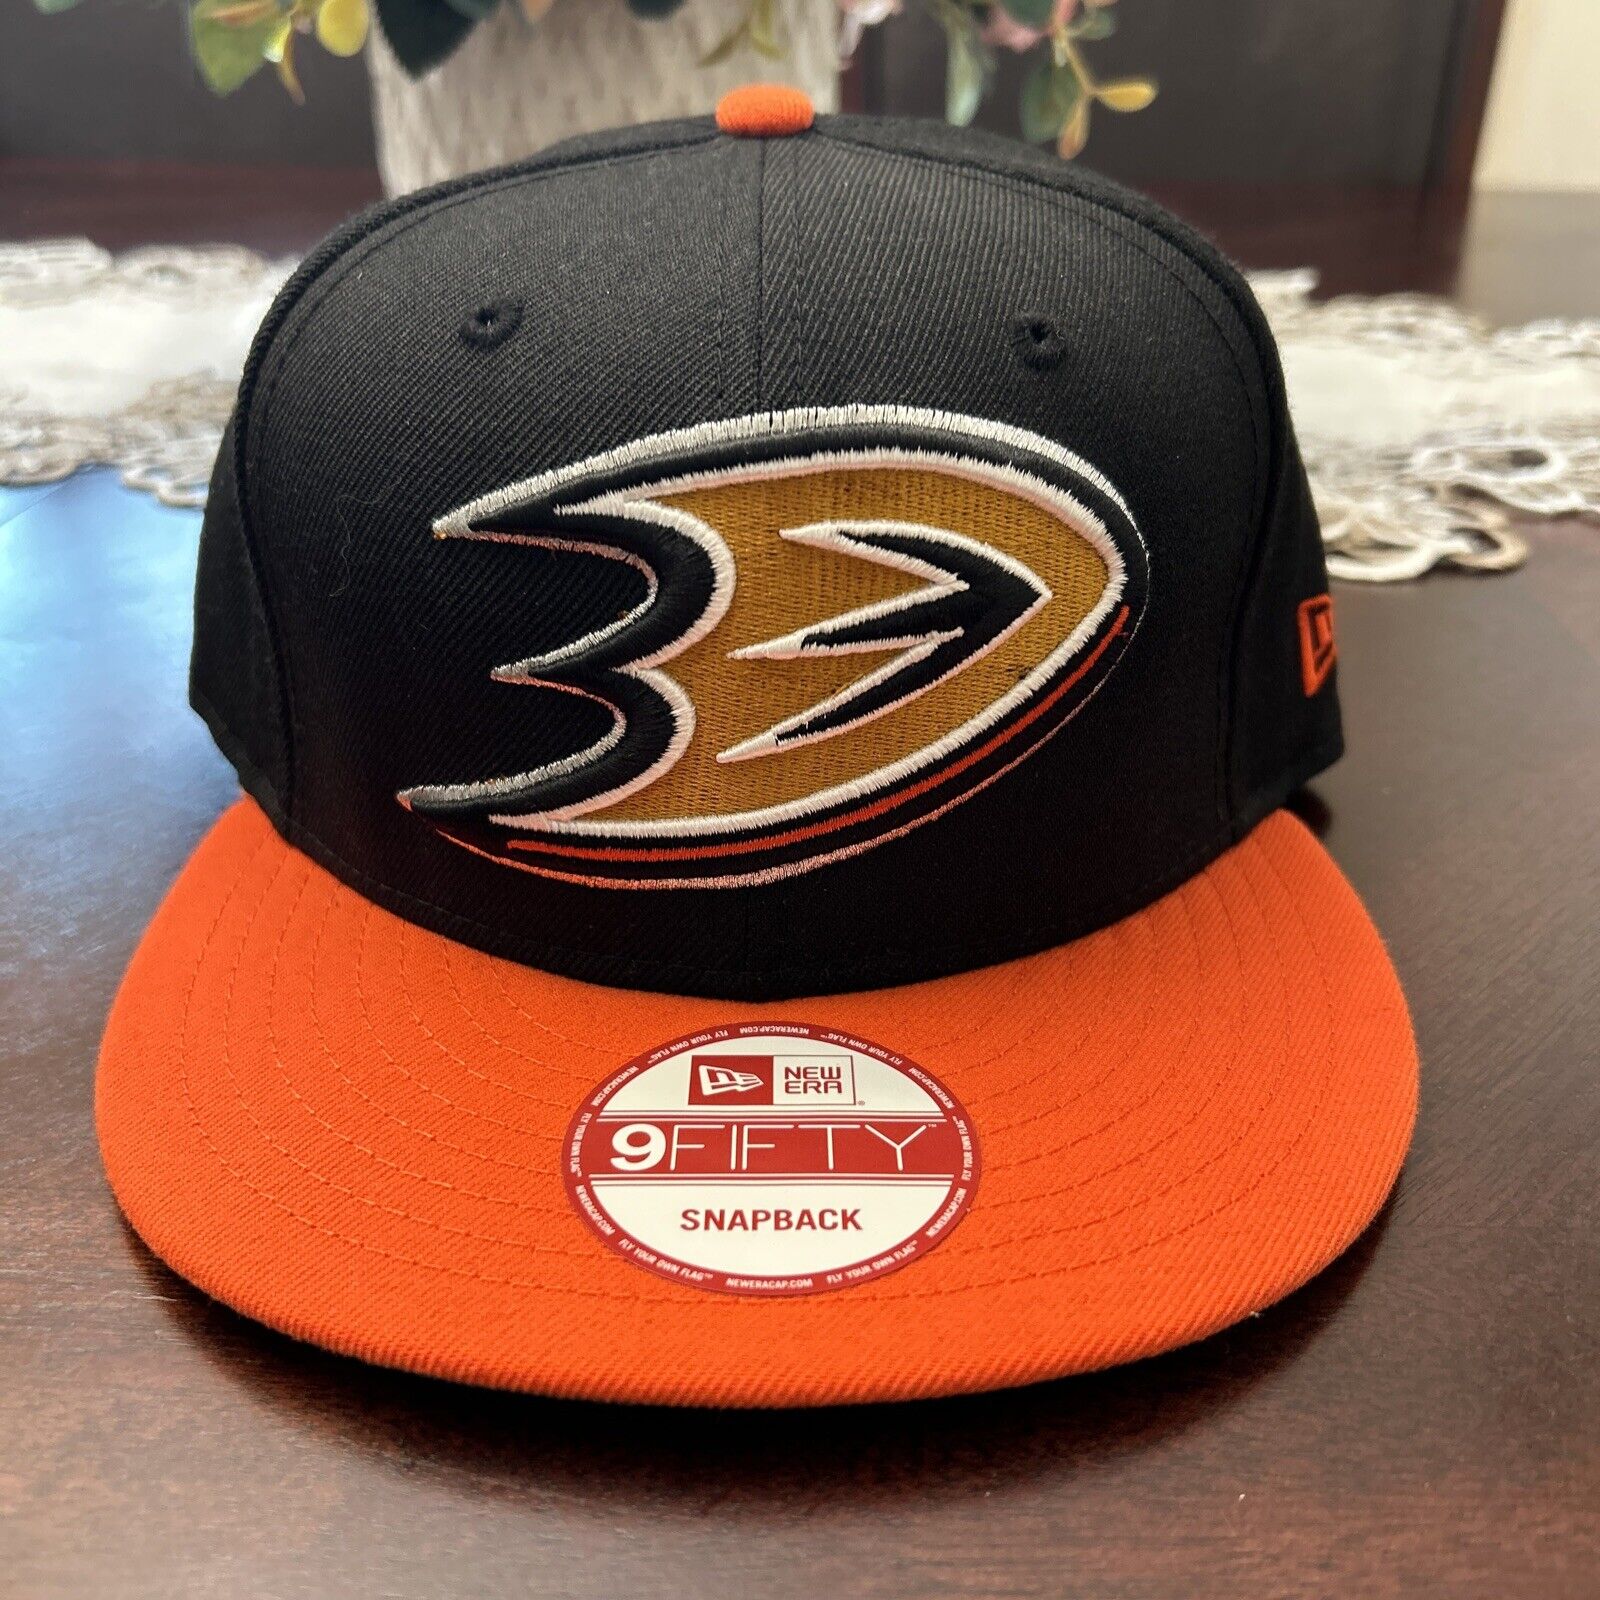 New Era 9FIFTY Anaheim Ducks Snapback Hat Black White Orange